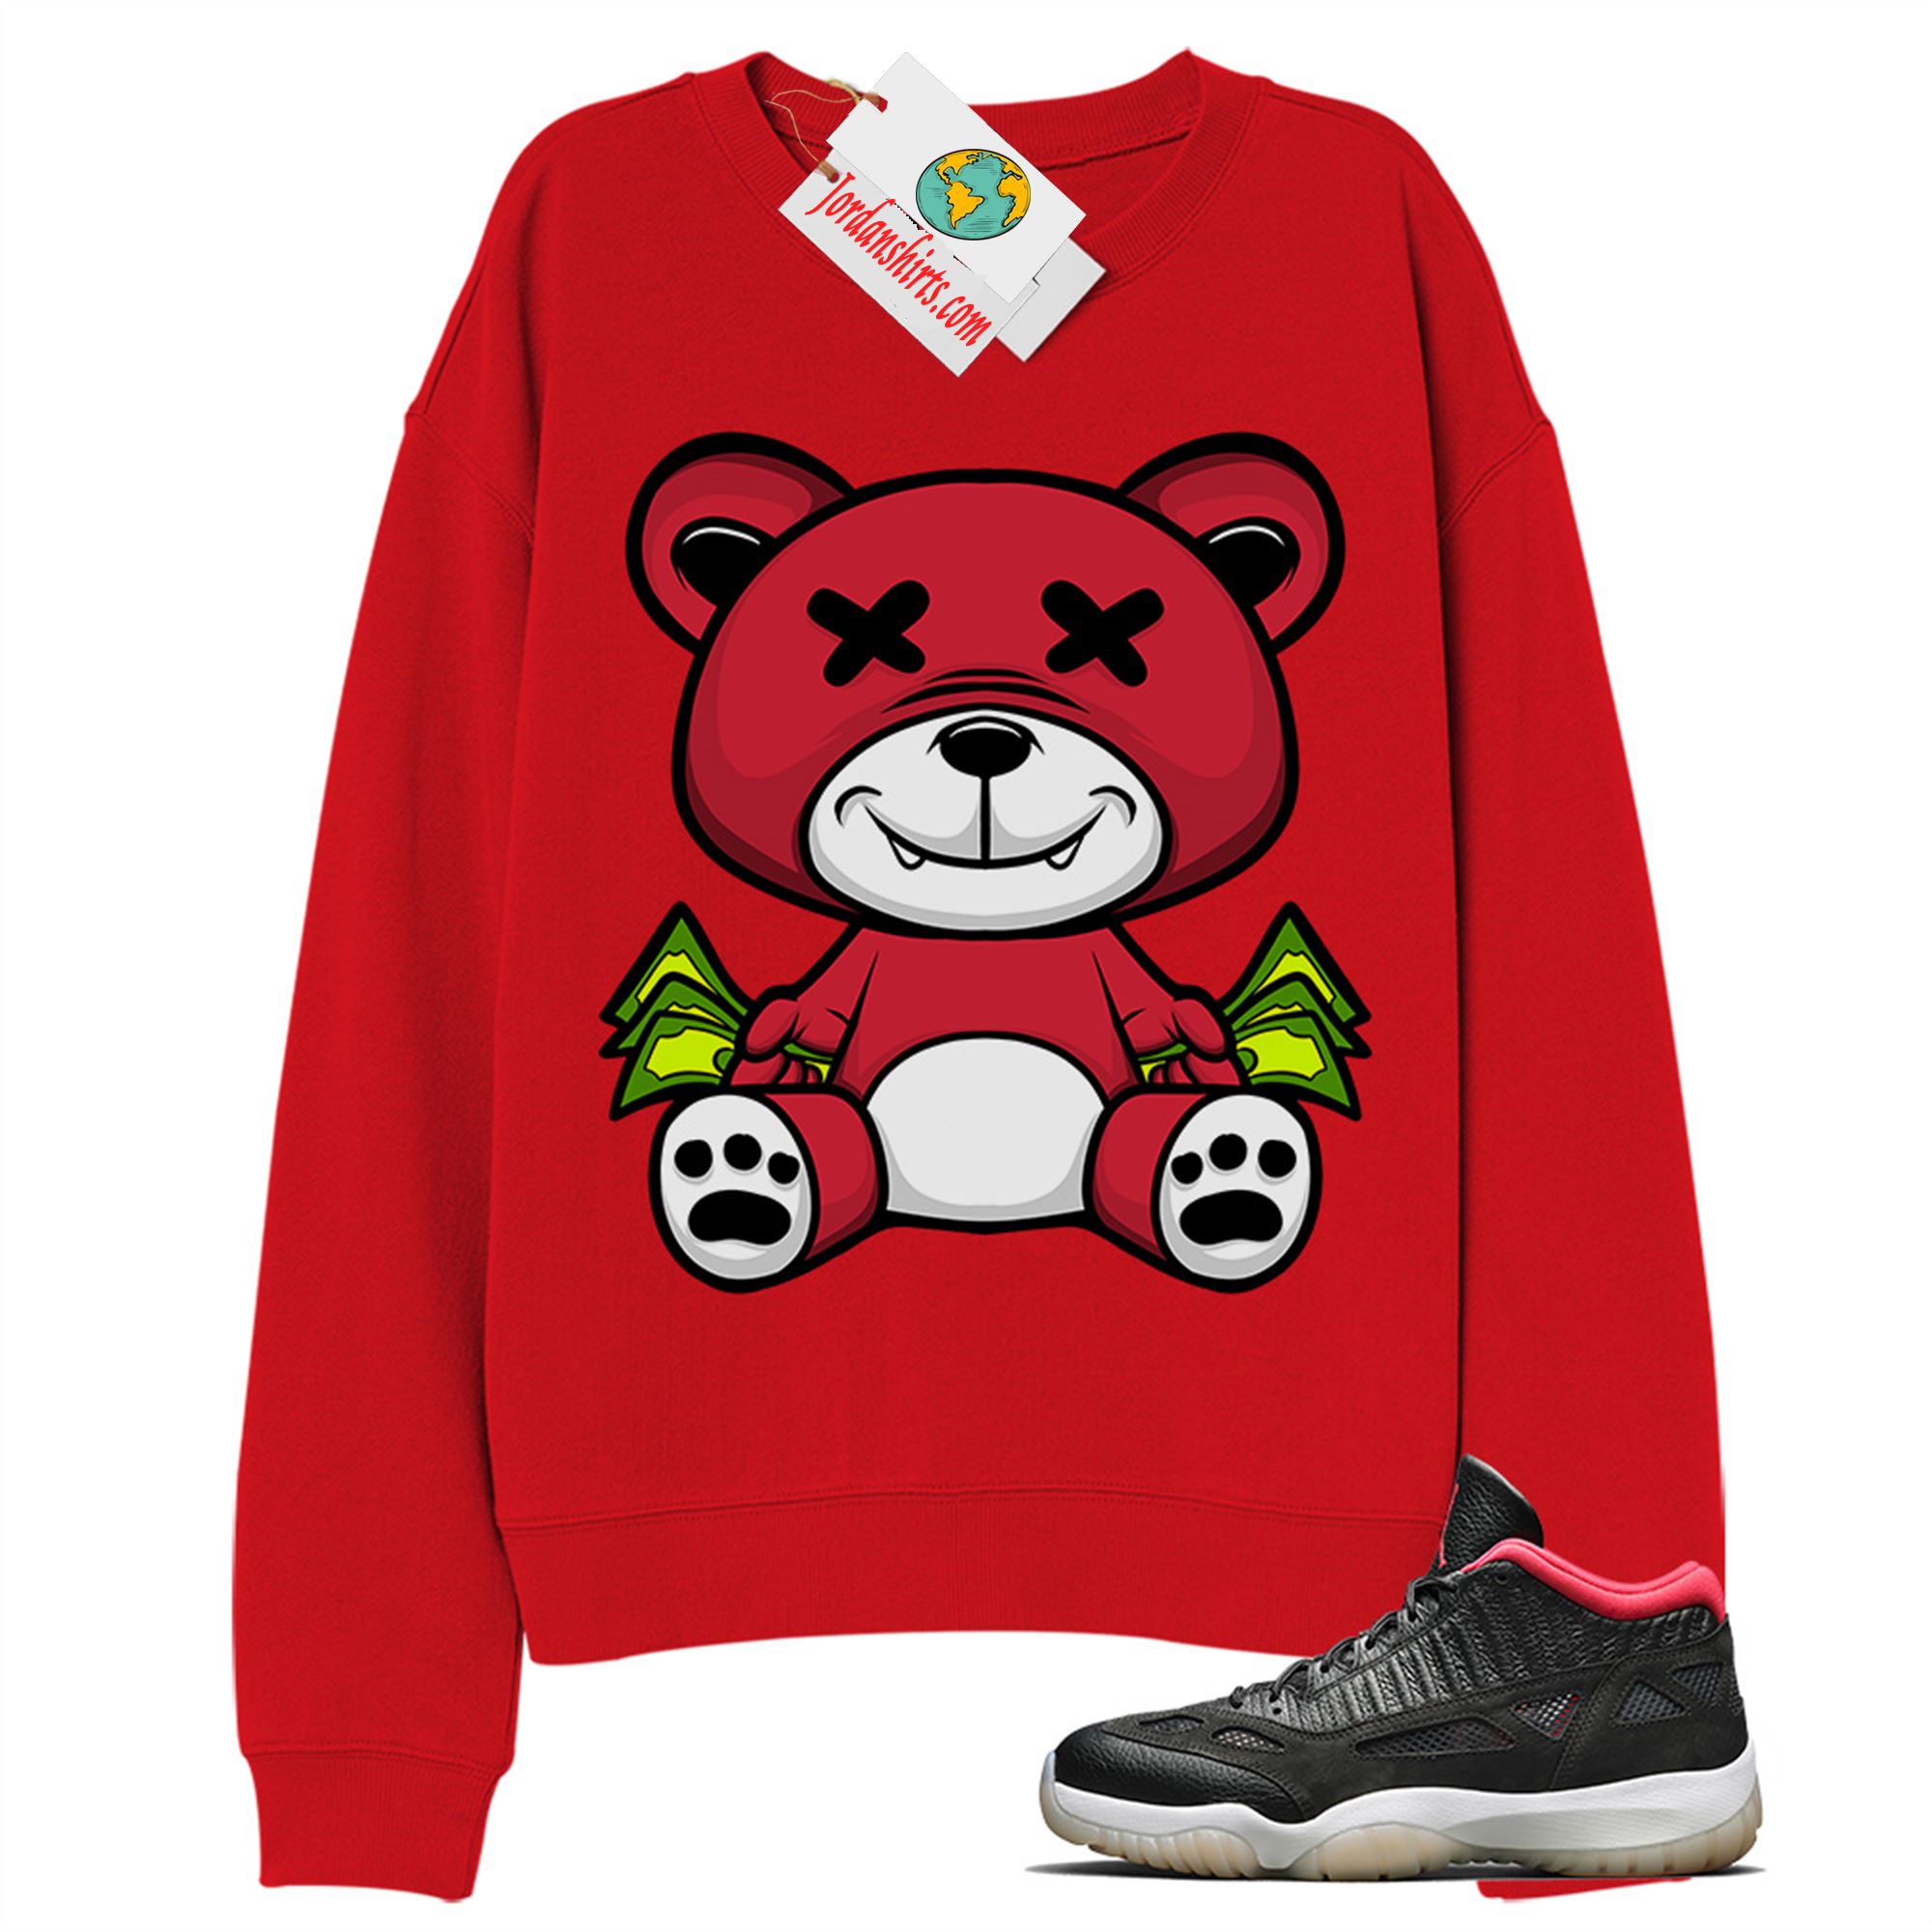 Jordan 11 Sweatshirt, Rich Teddy Bear Red Sweatshirt Air Jordan 11 Bred 11s Full Size Up To 5xl